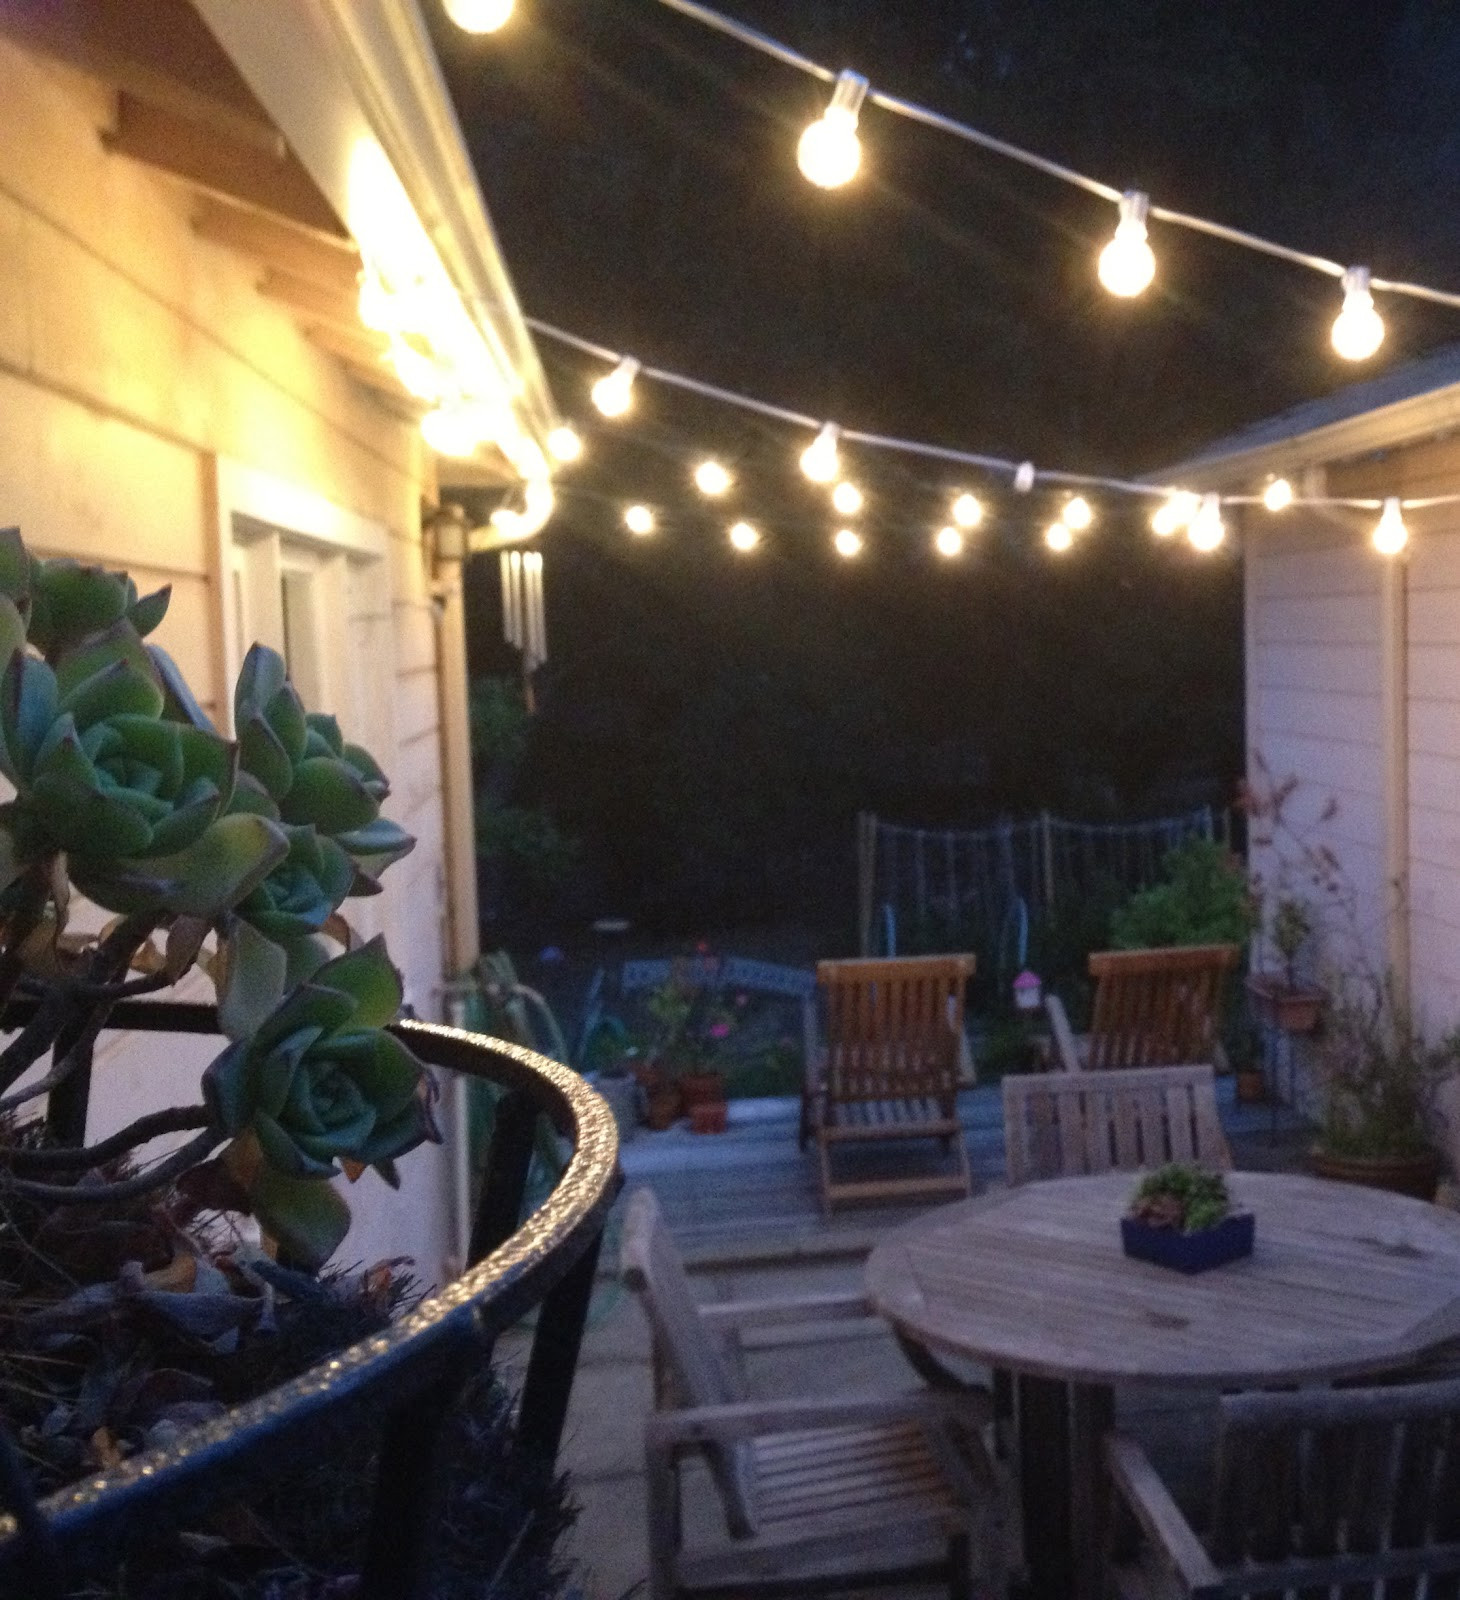 Backyard String Lighting Ideas
 The Best Exterior String Lights Ideas – HomesFeed